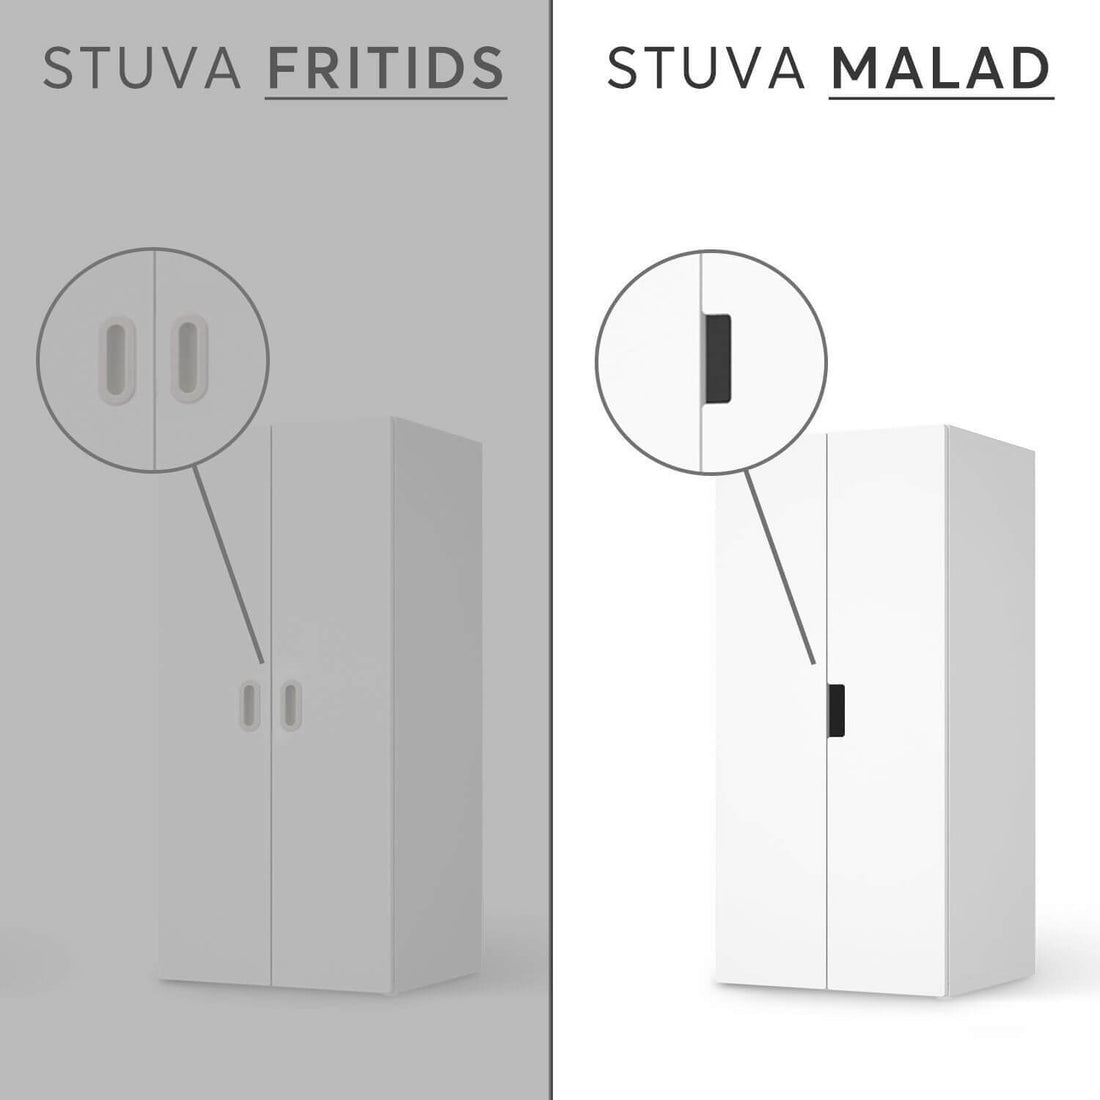 Vergleich IKEA Stuva Malad / Fritids - Hellgrün Dark